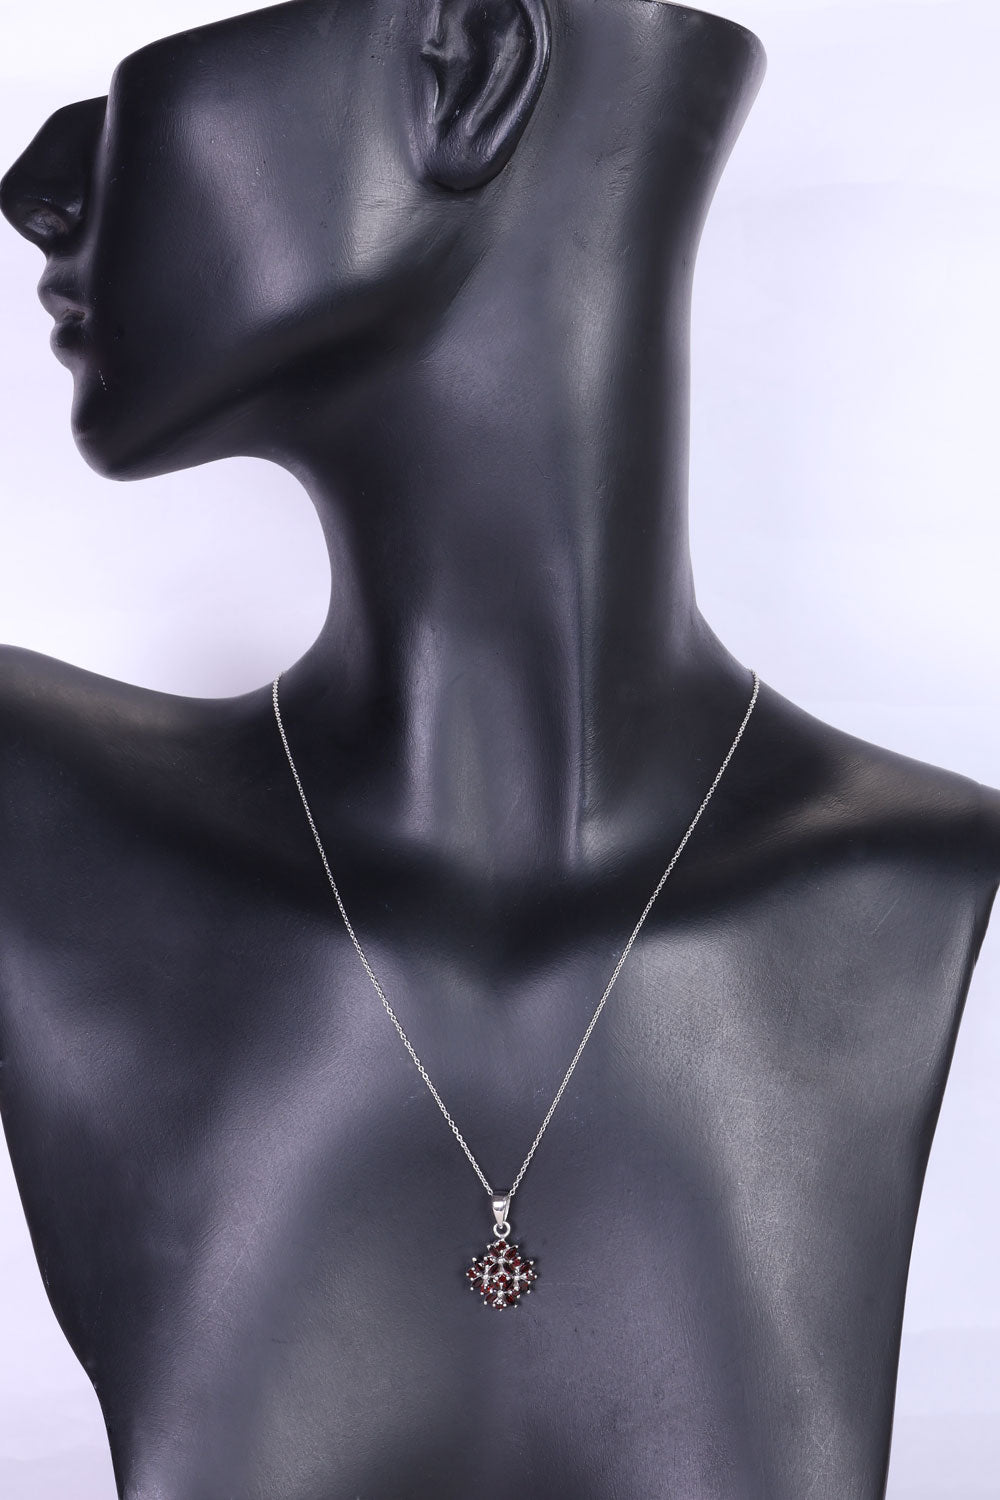 Garnet Sterling Silver Necklace Pendant Chain - Avishya